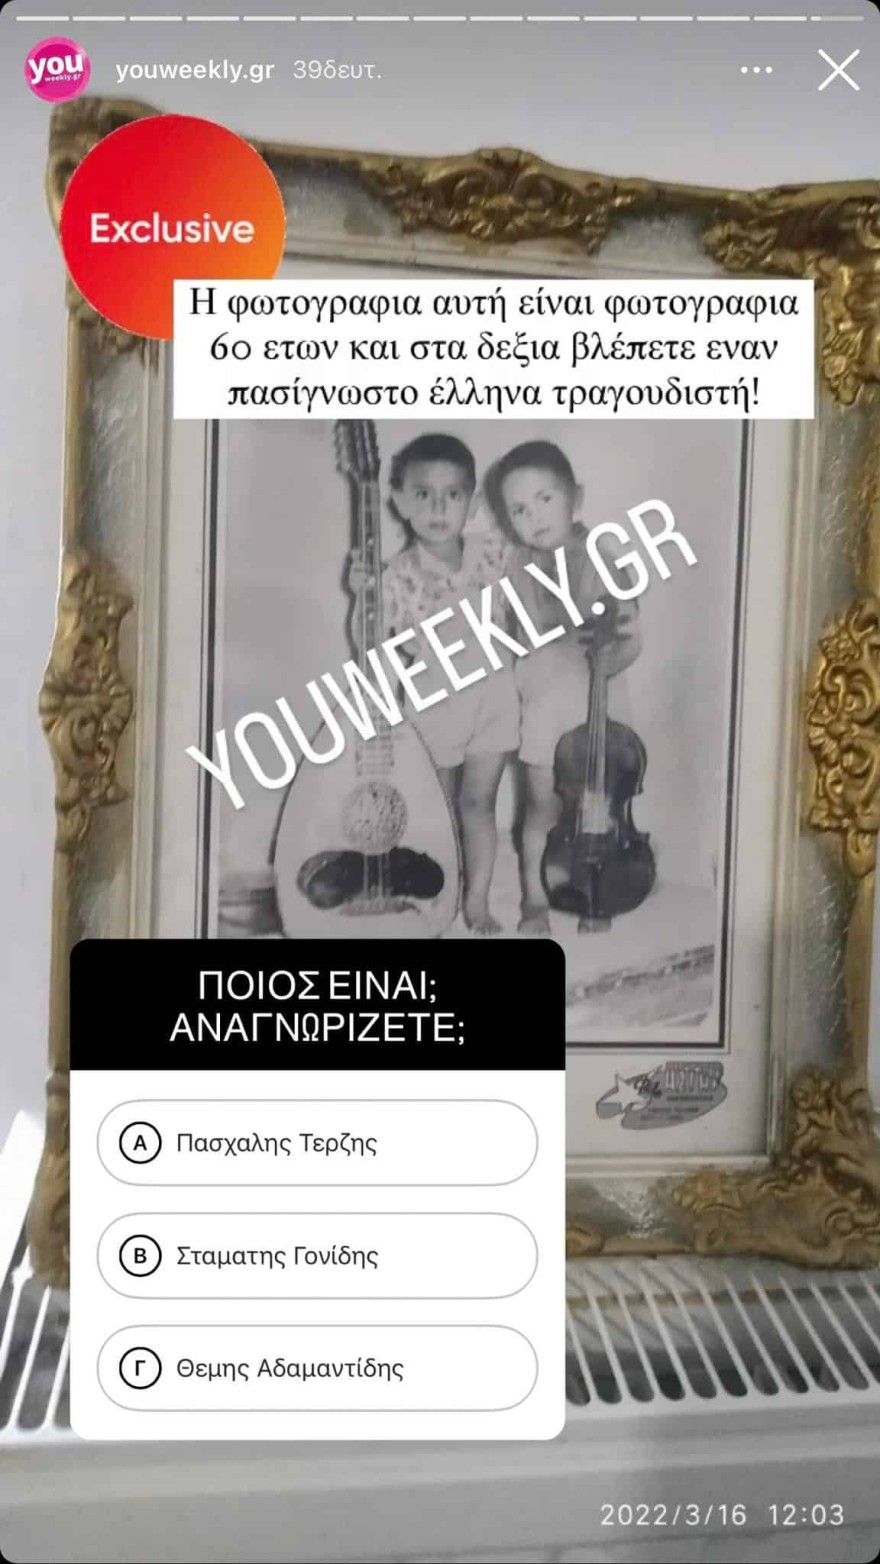 Instagram youweekly.gr